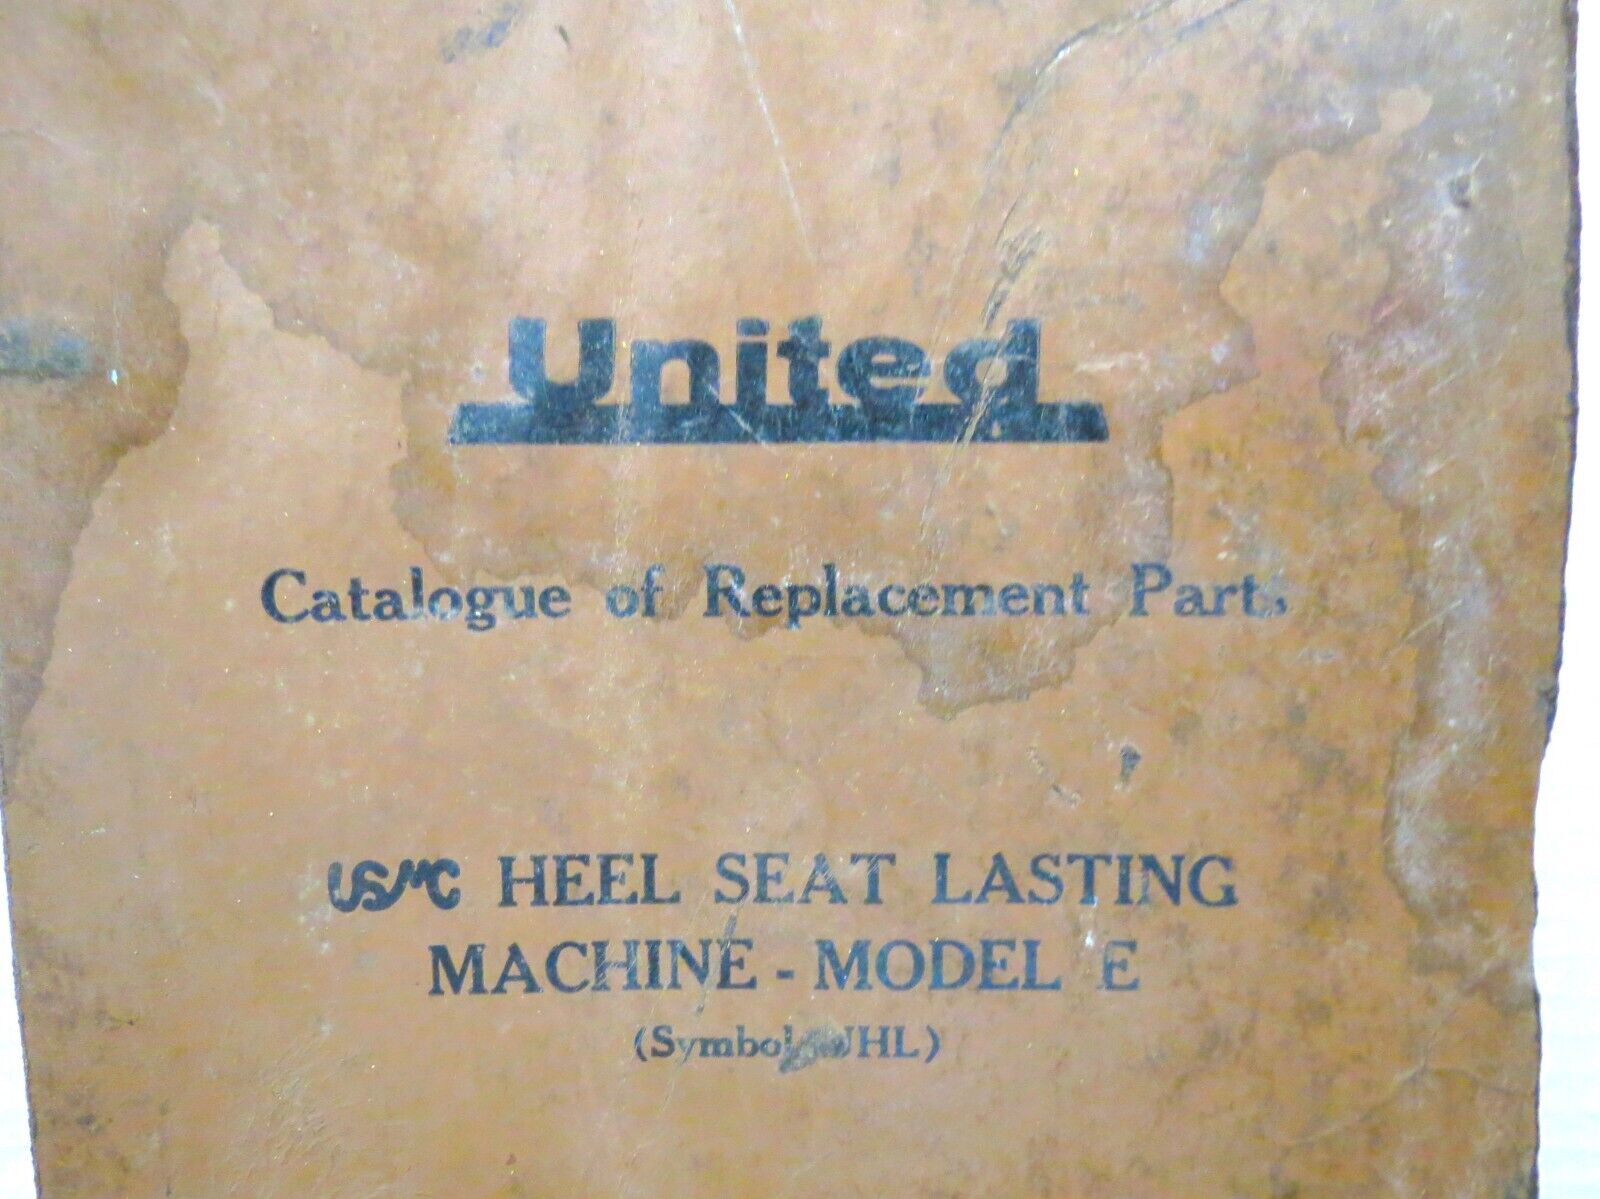 USM United Shoe Machinery Co. Parts Replacement Catalog Lasting Machine Model E